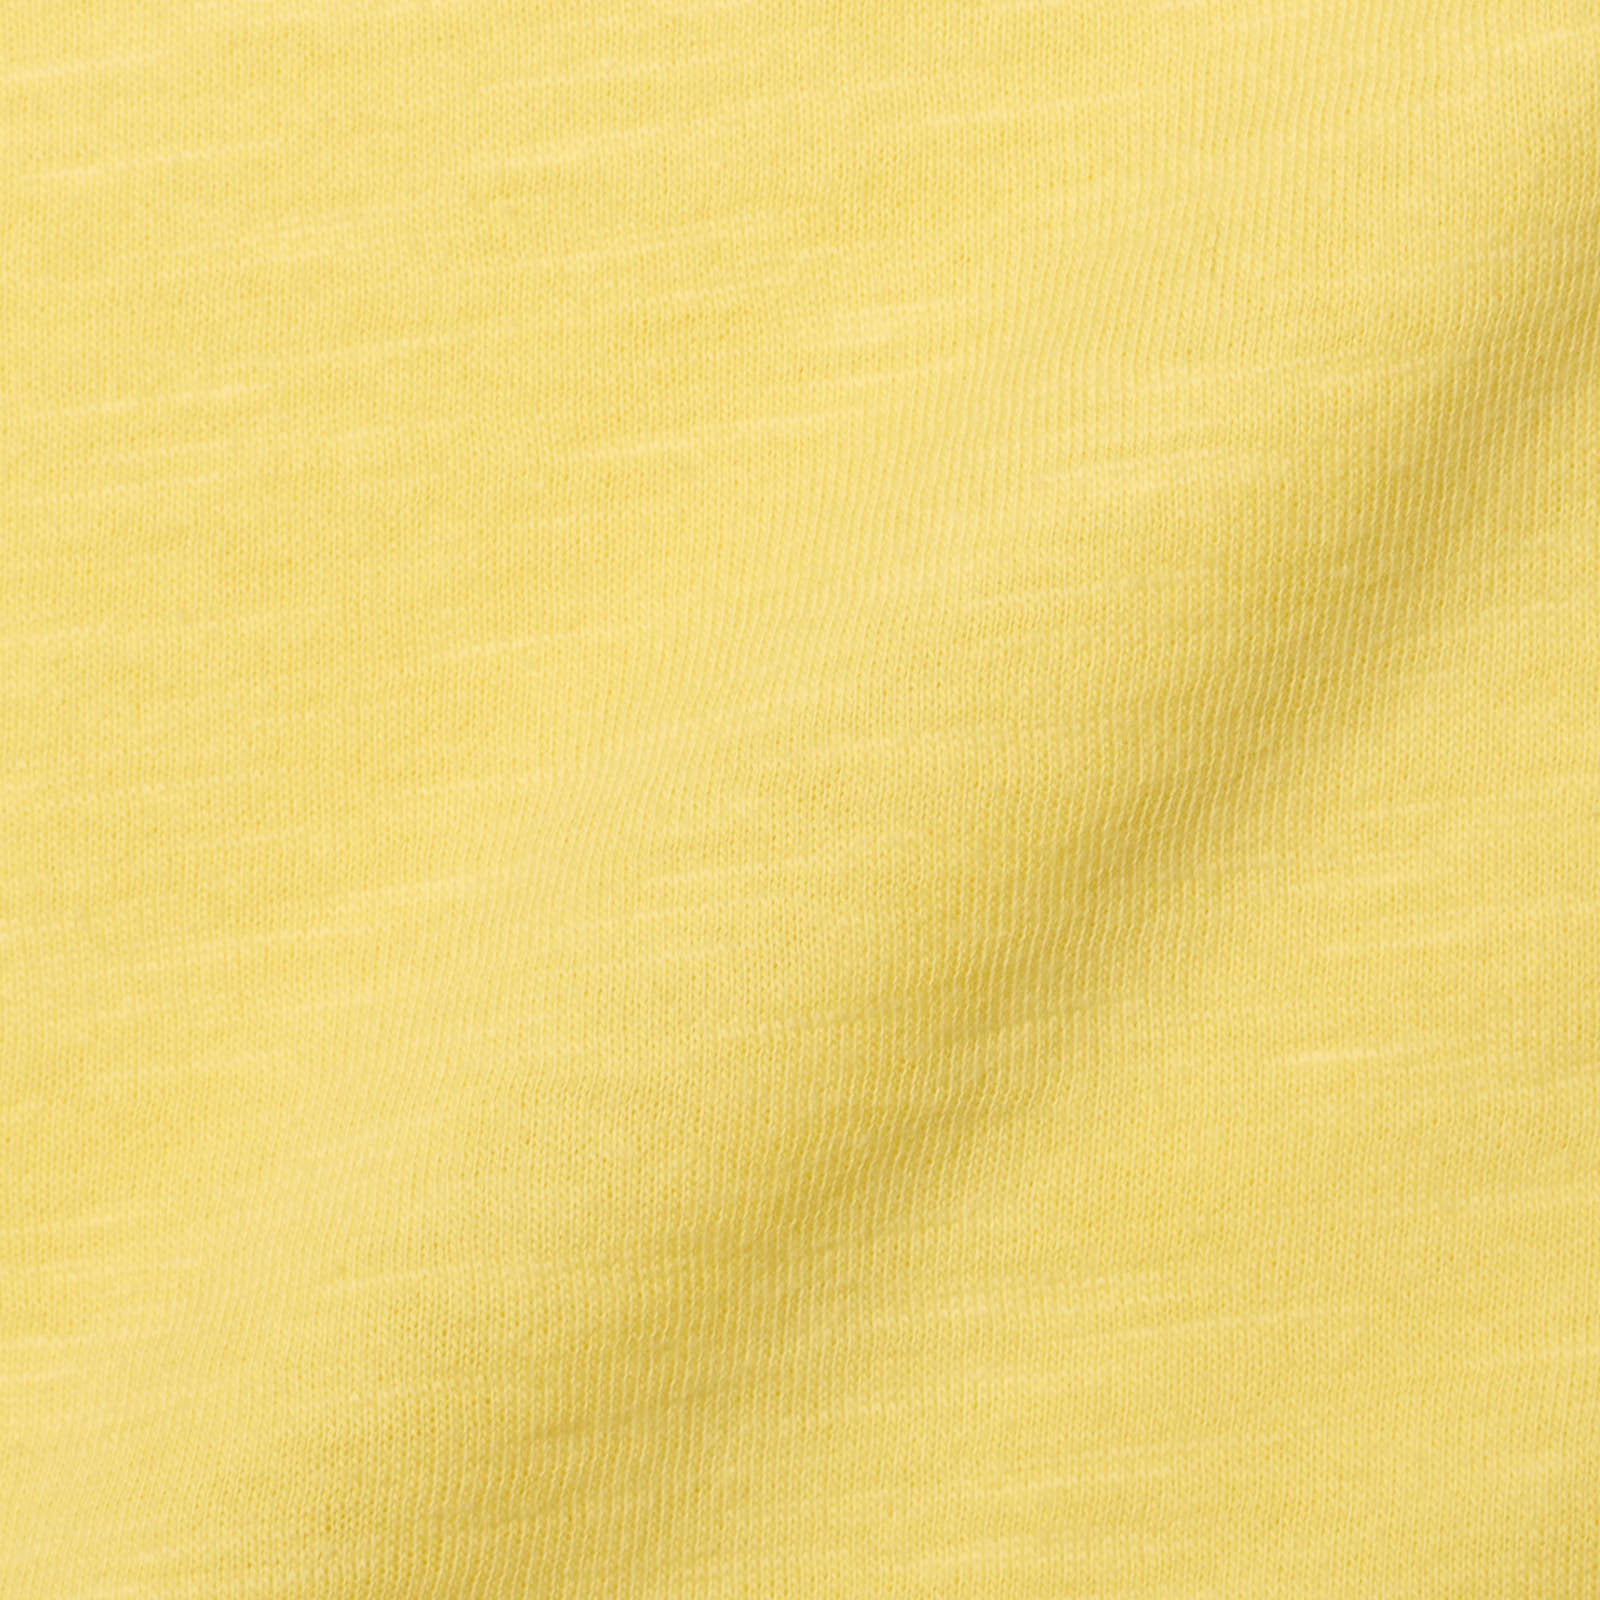 LIU JO Milano Yellow Icecream Print Cotton Chest Pocket Short Sleeve T-Shirt